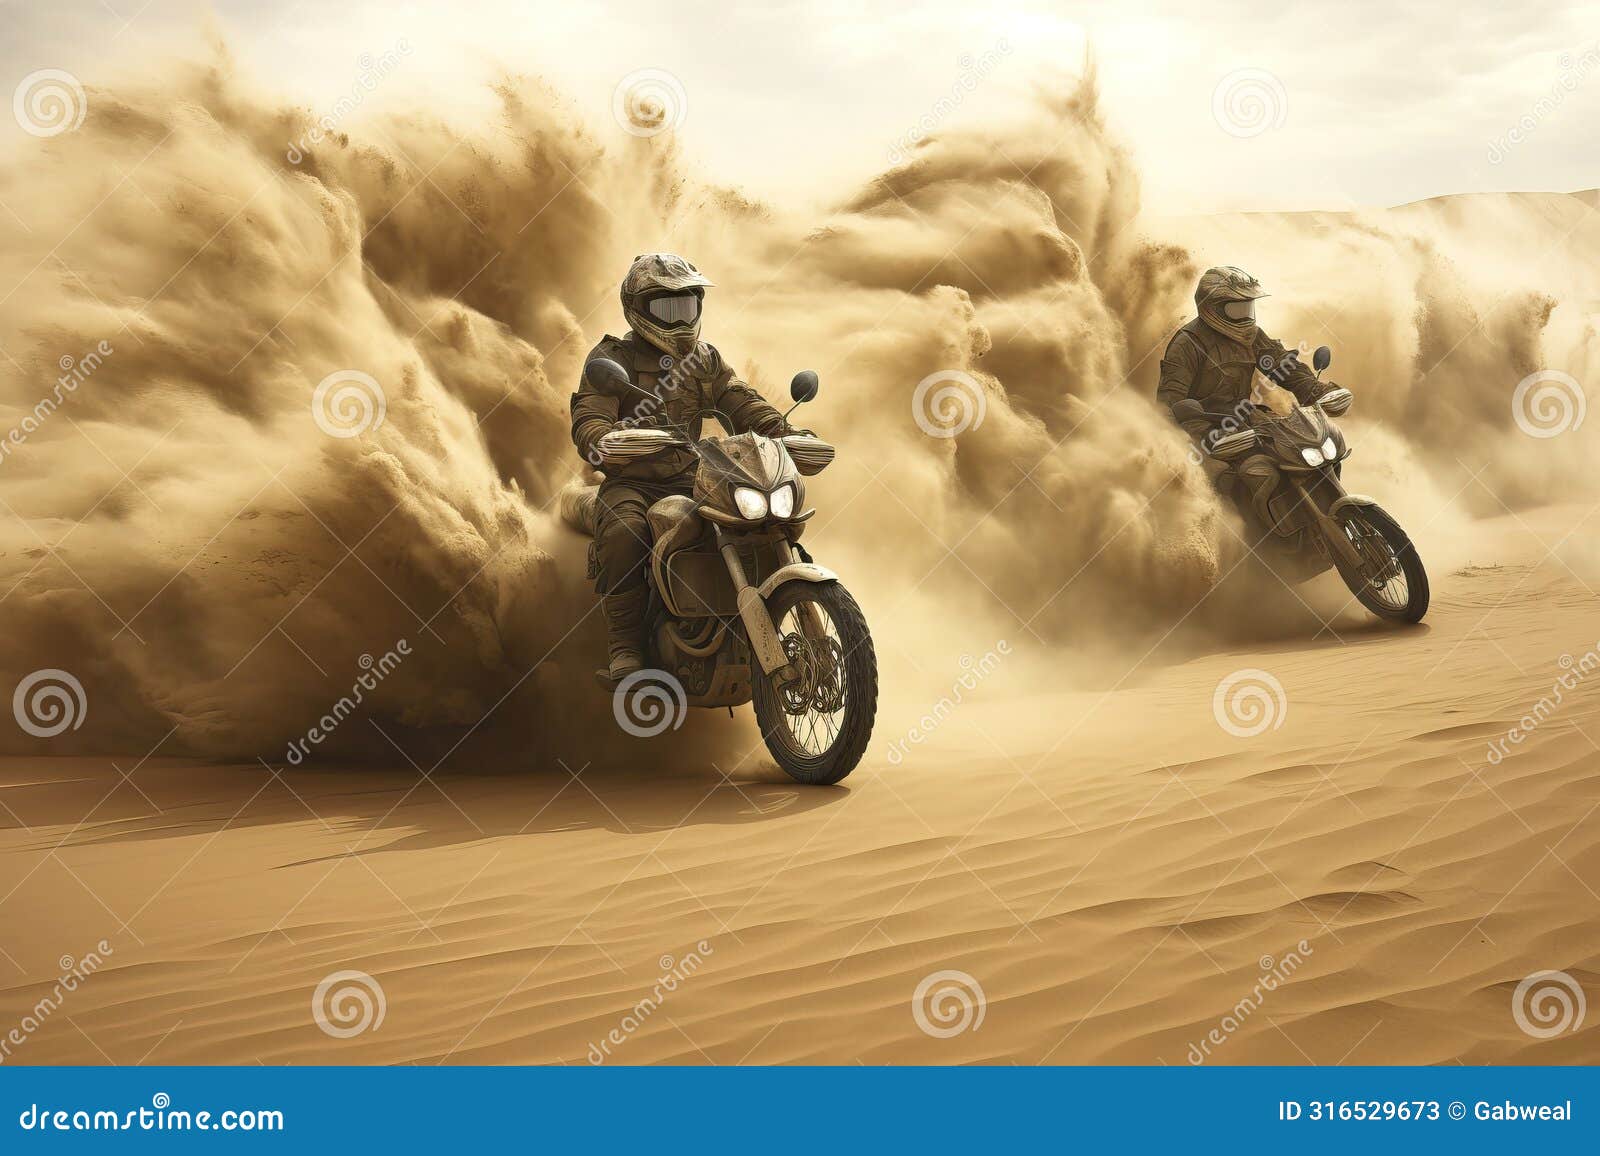 motorbikes racing through the desert, ai generated